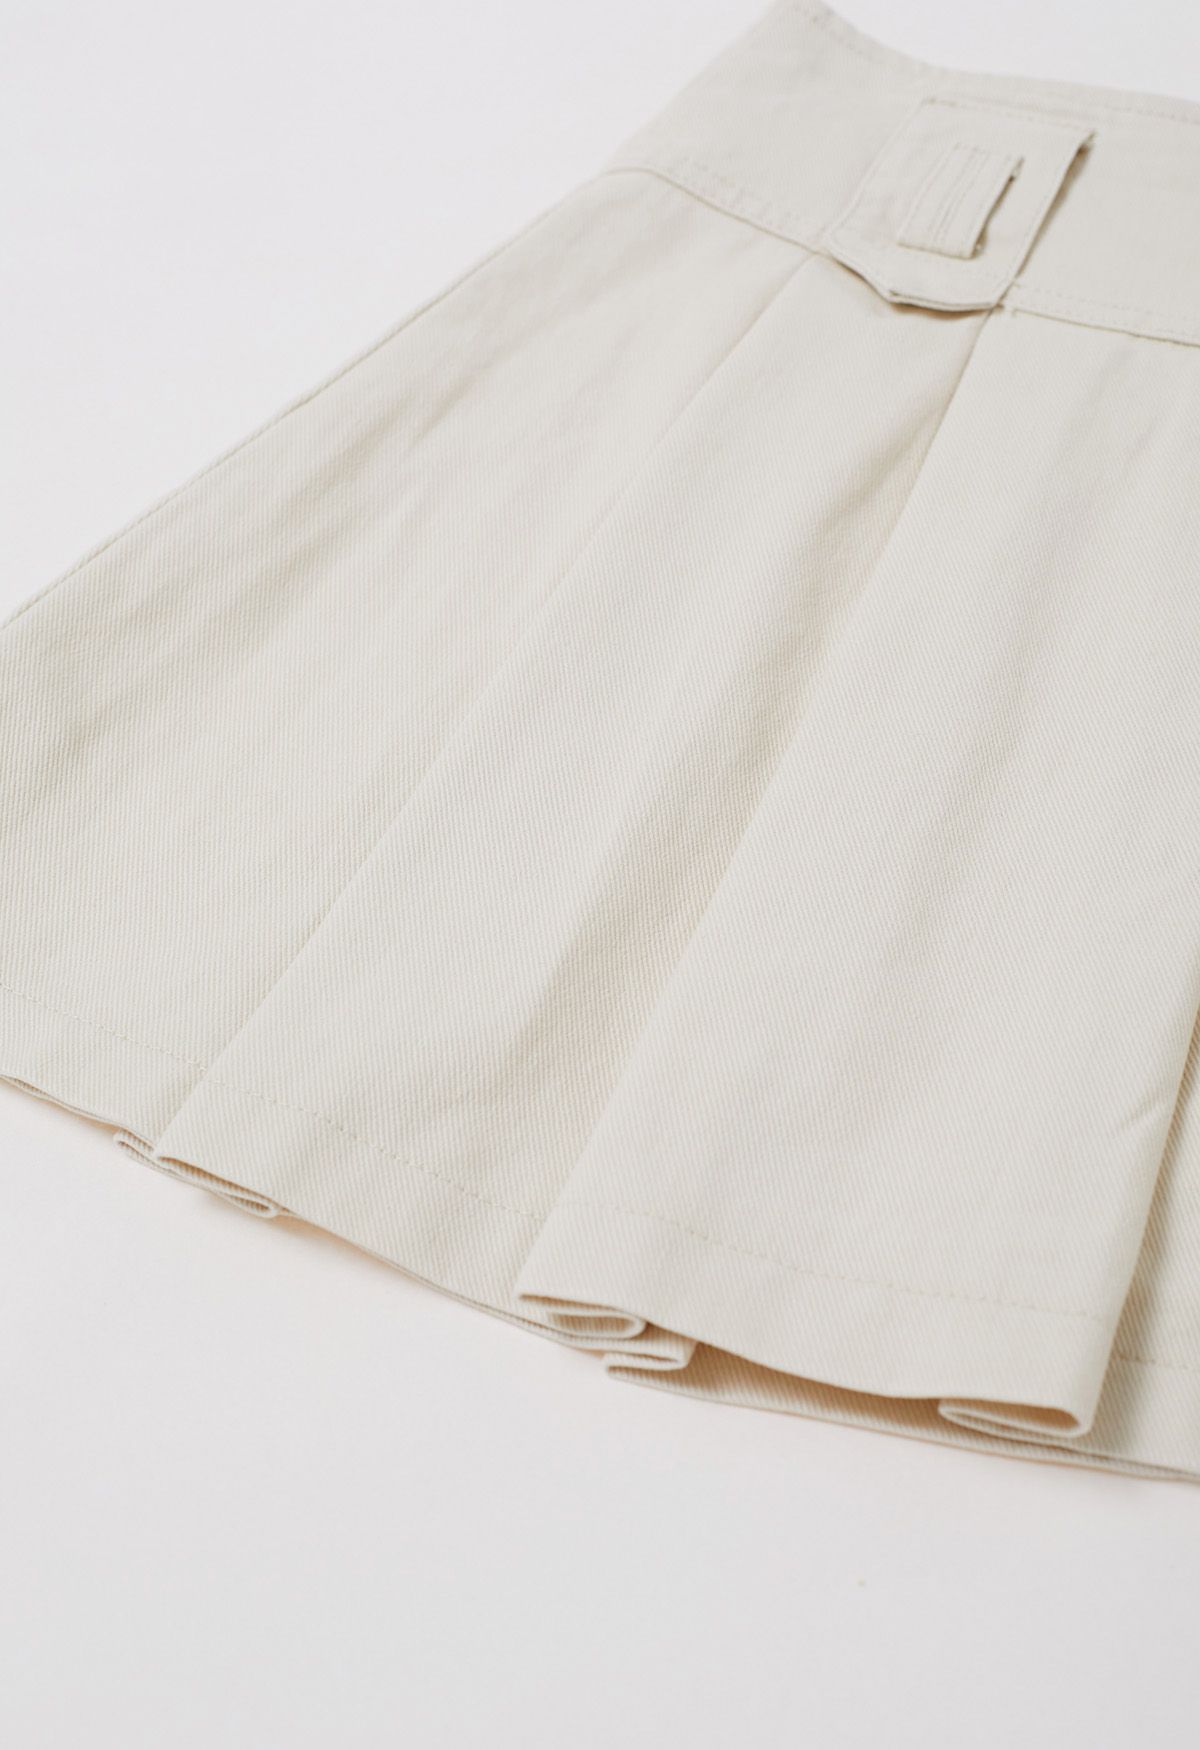 Classic Pleat Denim Mini Skirt with Belt in Ivory